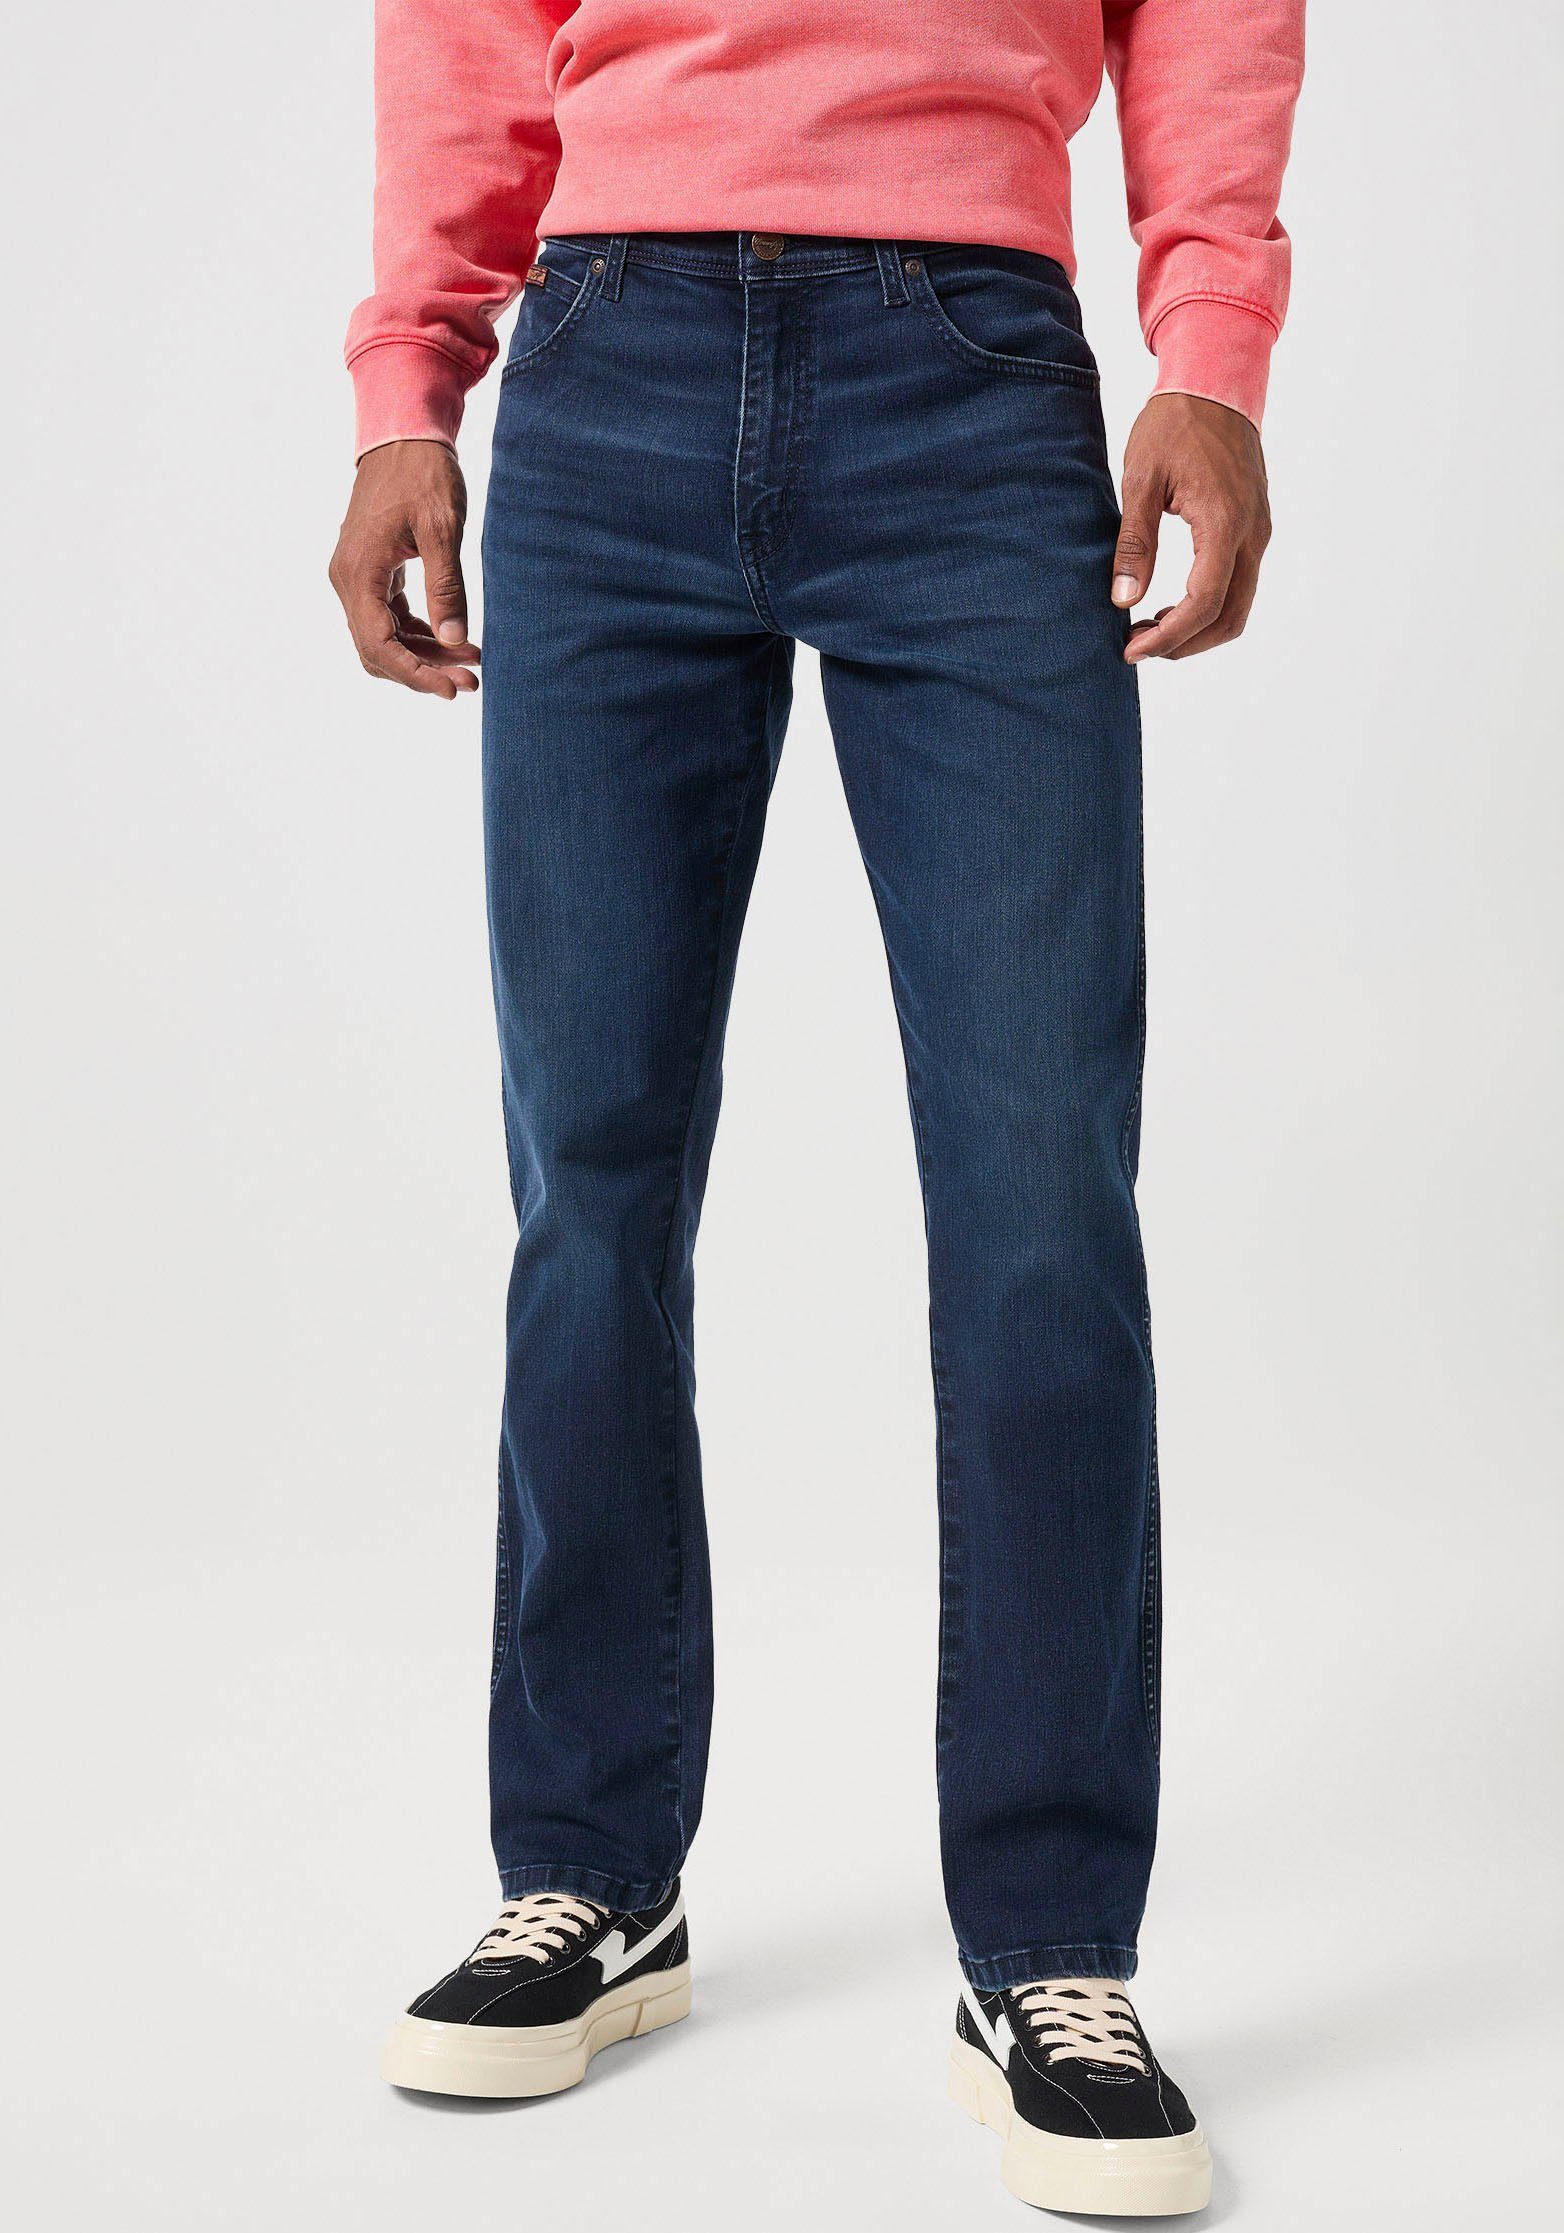 Wrangler 5-pocket jeans TEXAS SLIM FREE TO STRETCH